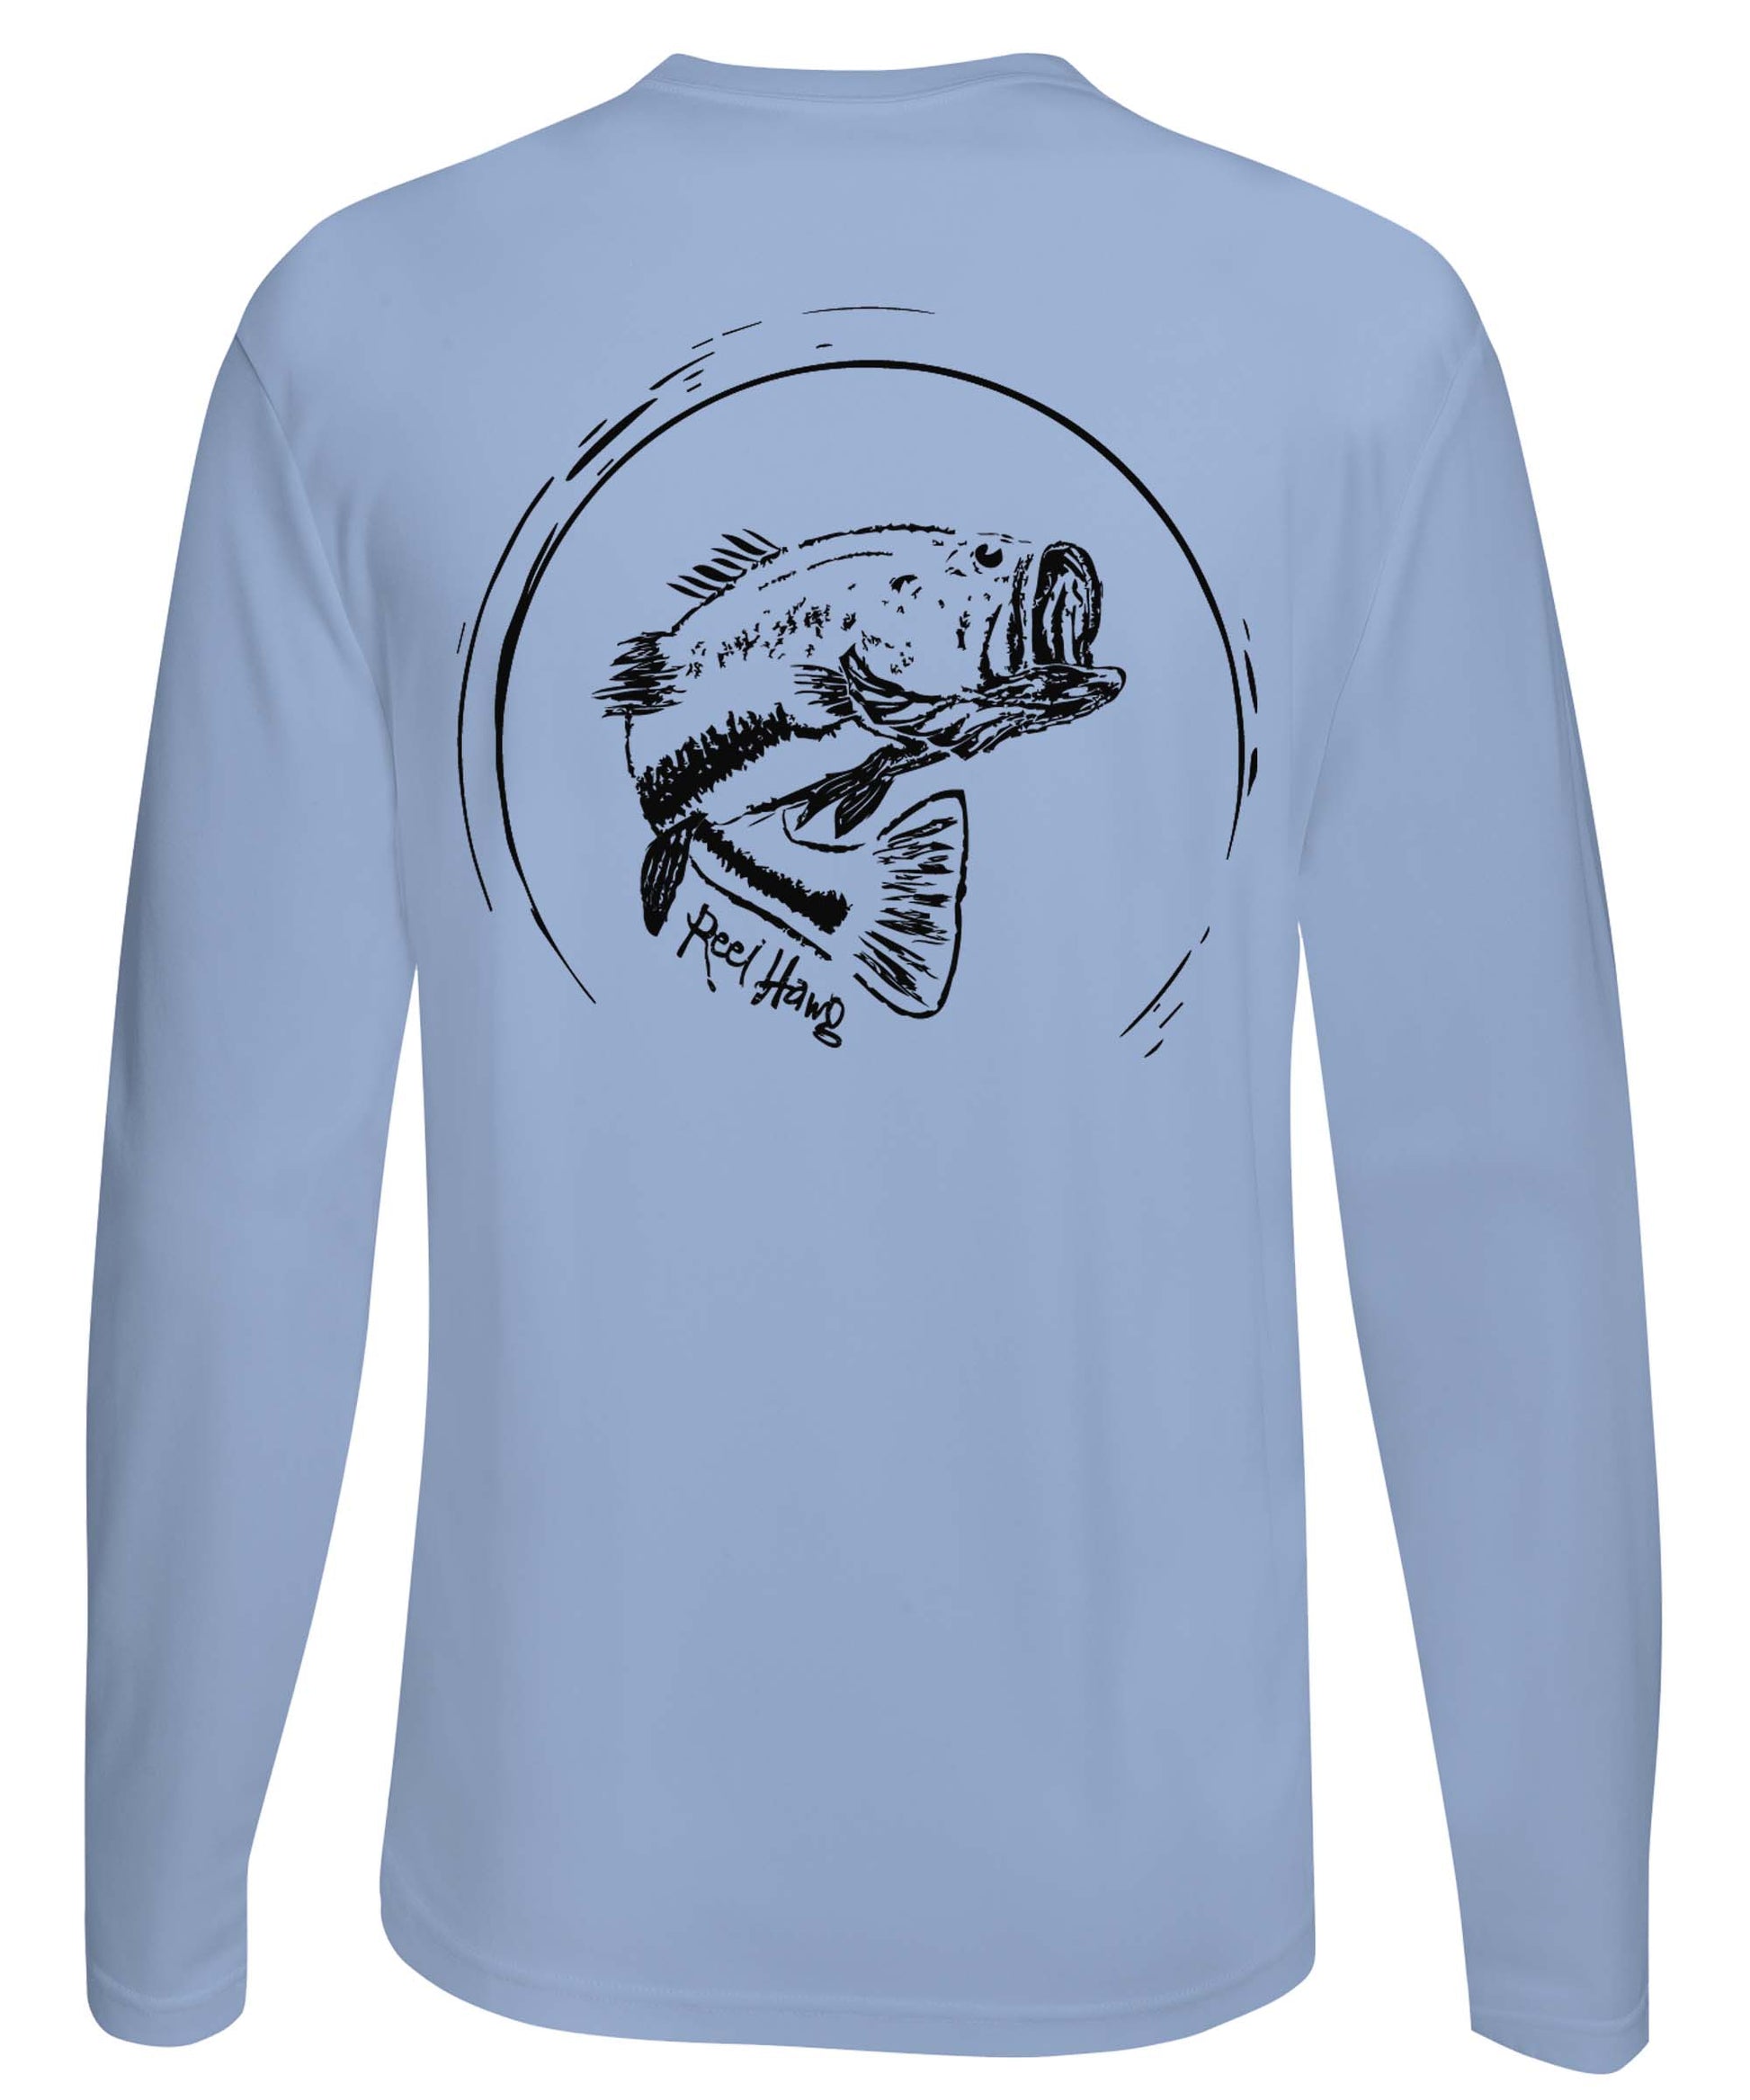 Bass Fishing Performance Dry-Fit 50+ UPF Sun Protection Shirts -Reel Fishy Apparel XL / Graphite Camo L/S - unisex